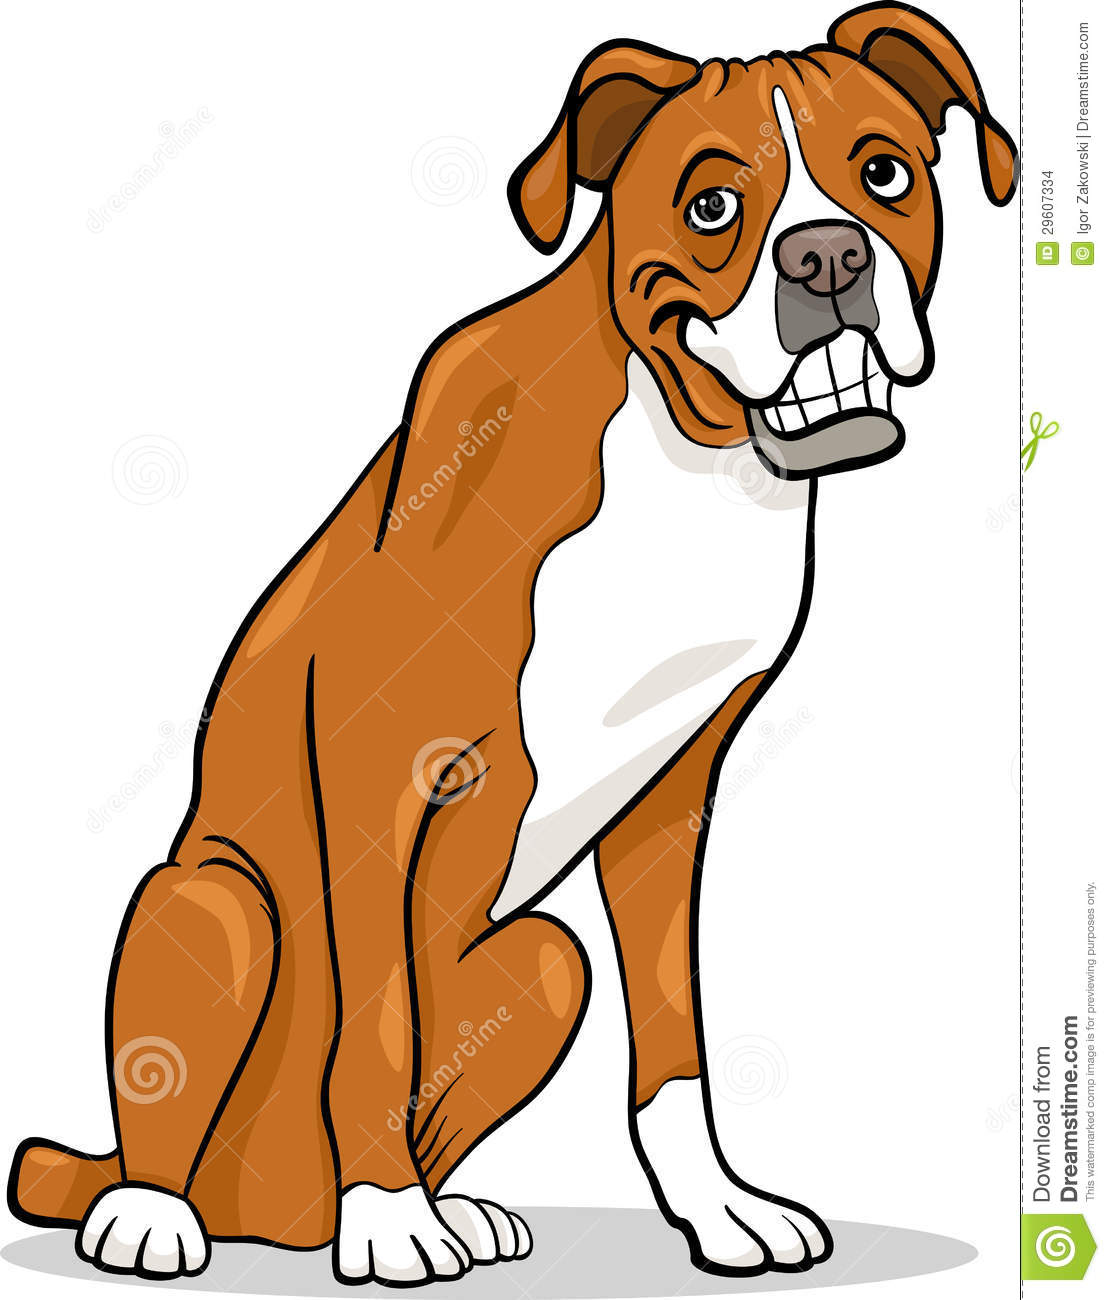 Boxer Purebred Dog Cartoon Illustration Stock Images   Image  29607334